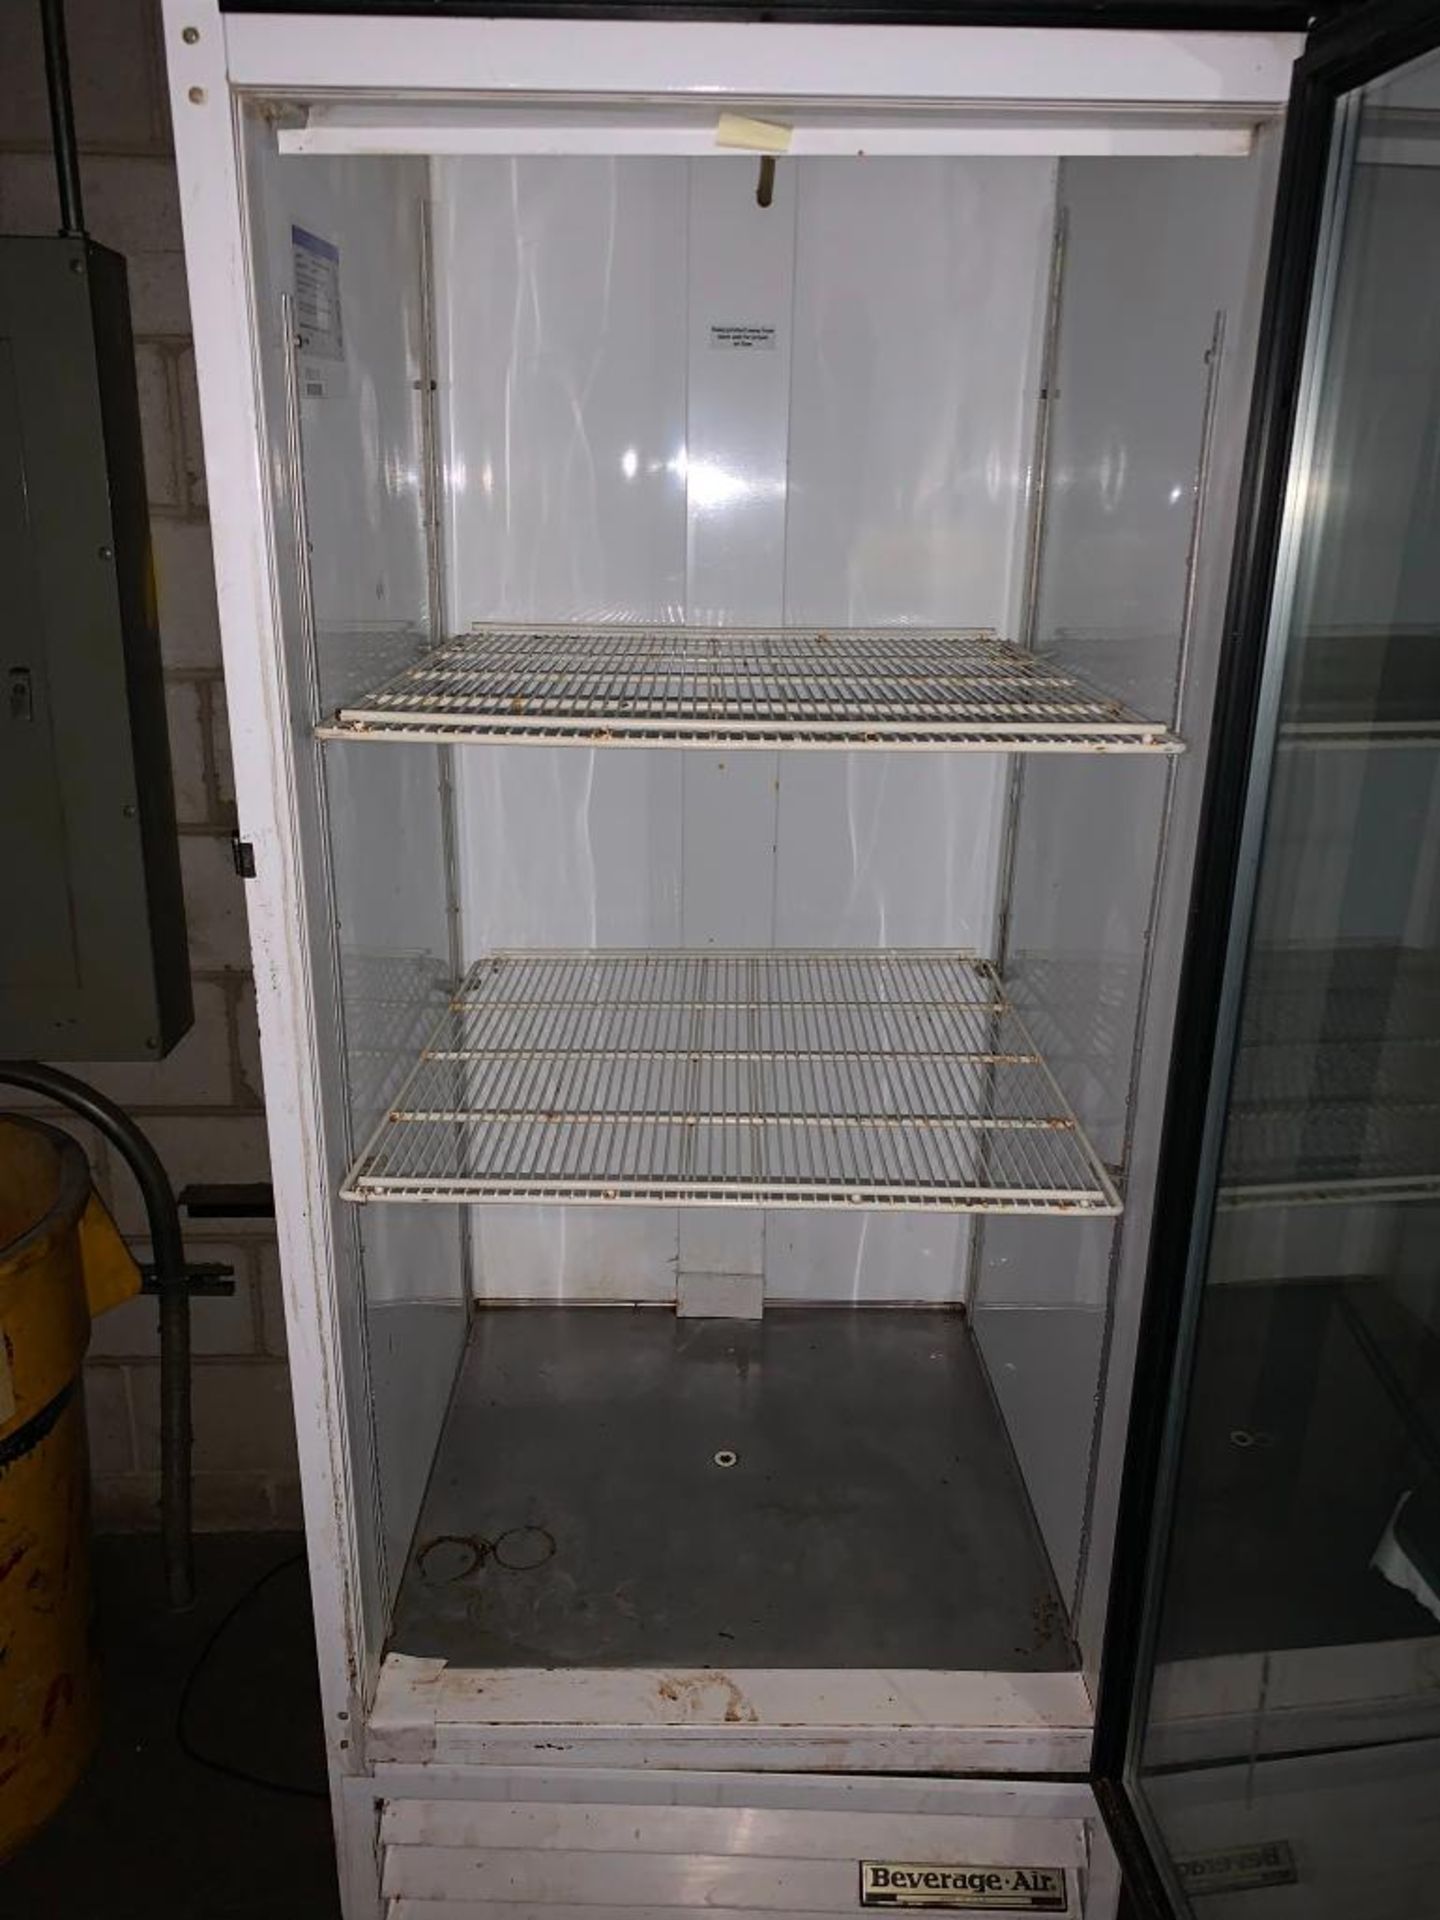 Beverage Air Glass Door Commercial Refrigerator - Image 4 of 4